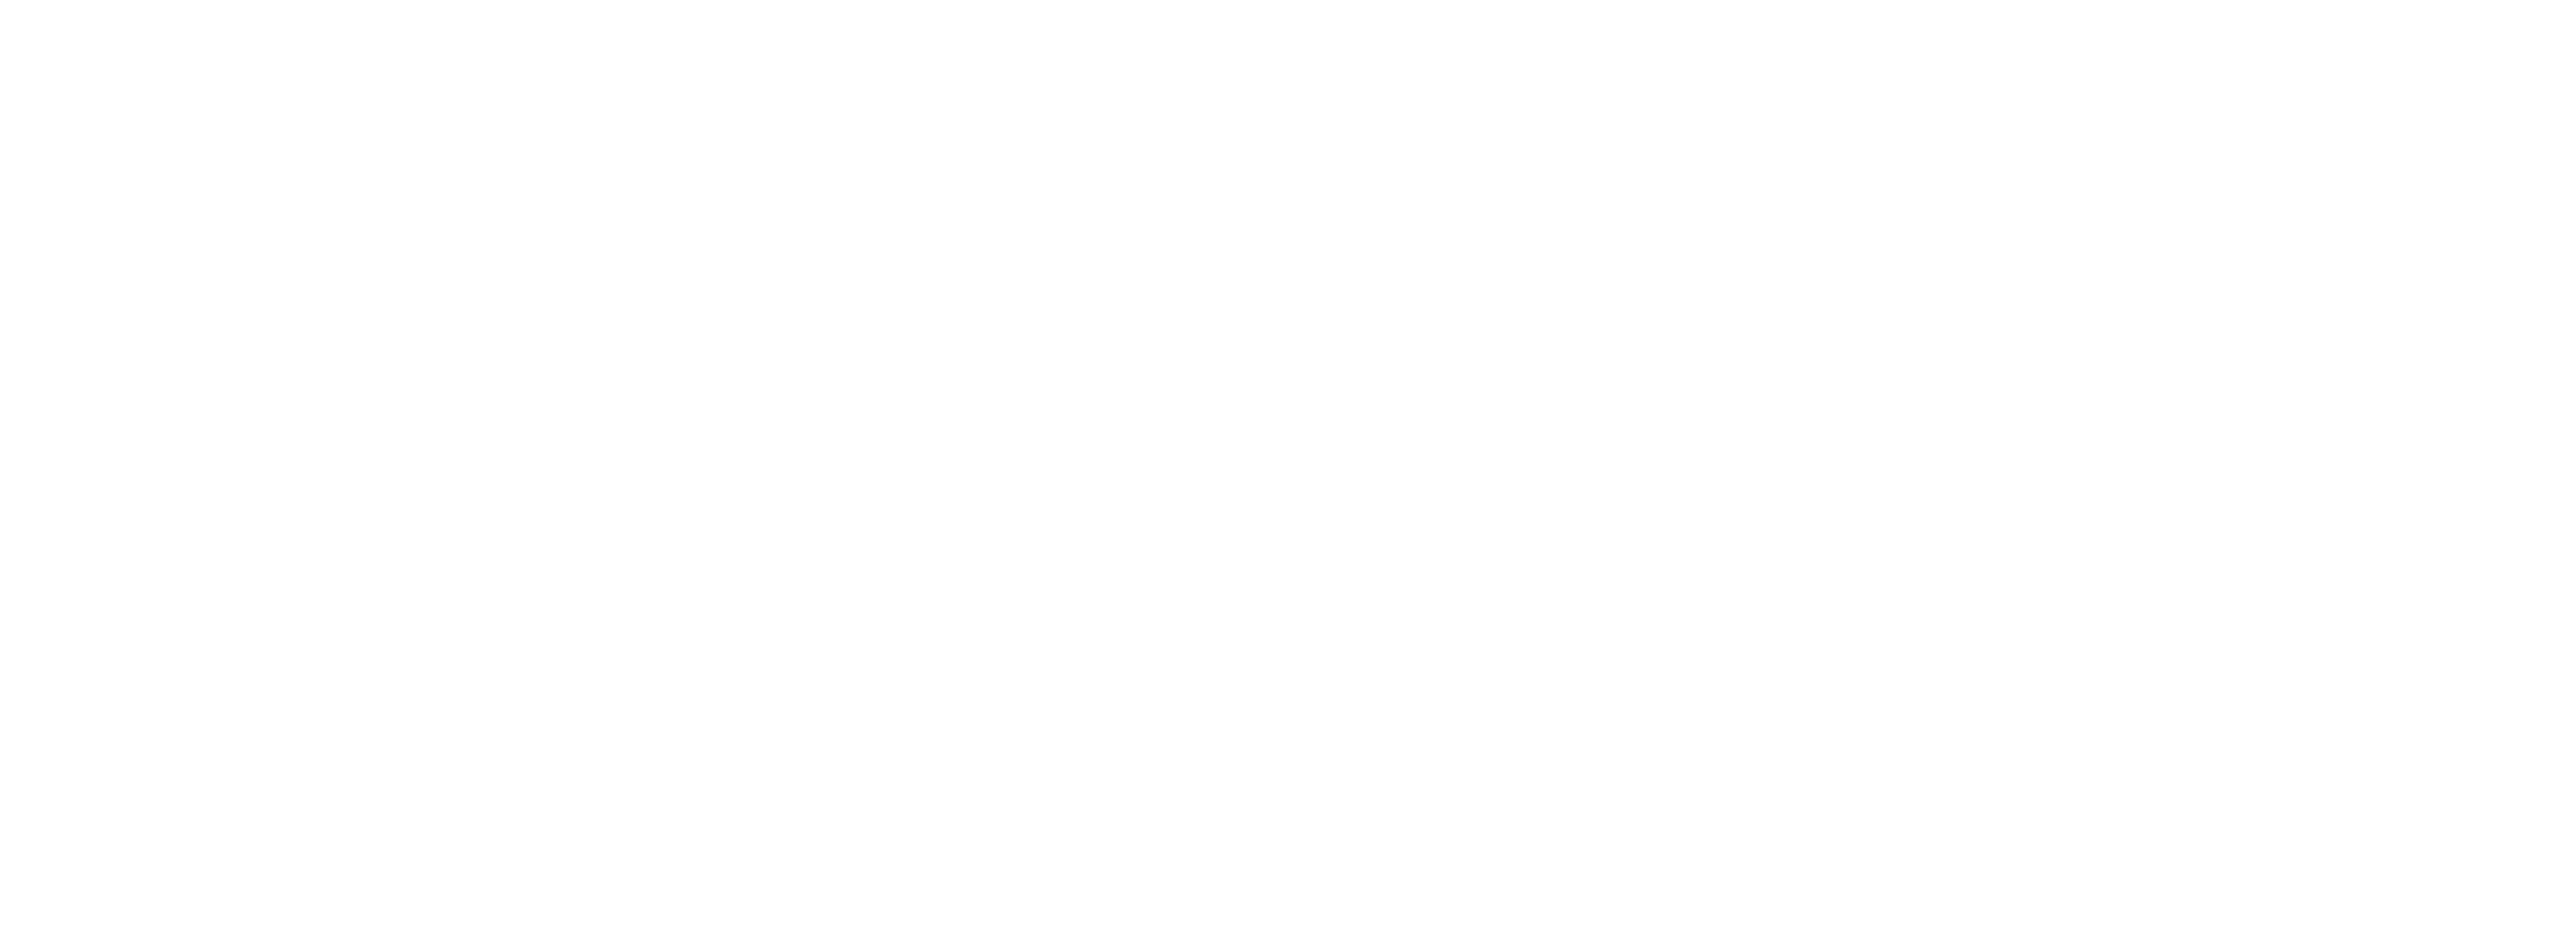 Logo Argea in trasparenza